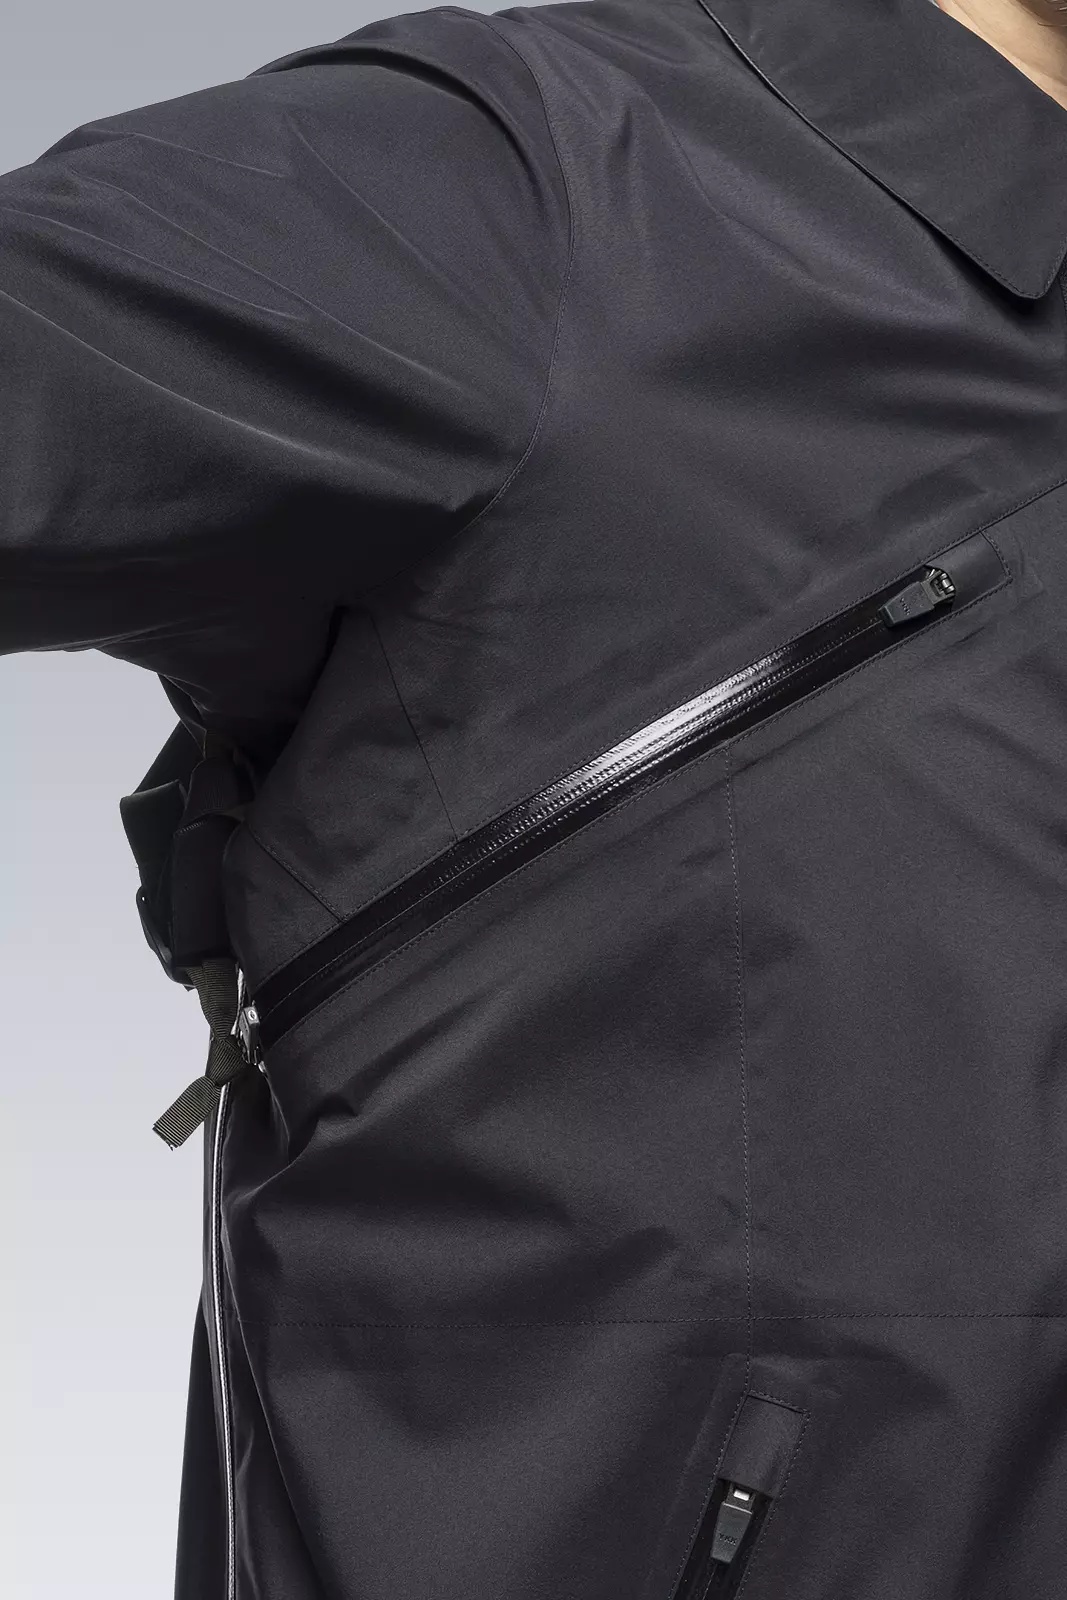 J1A-GTKR-BKS KR EX 3L Gore-Tex® Pro Interops Jacket Black with size 5 WR zippers in gloss black - 27